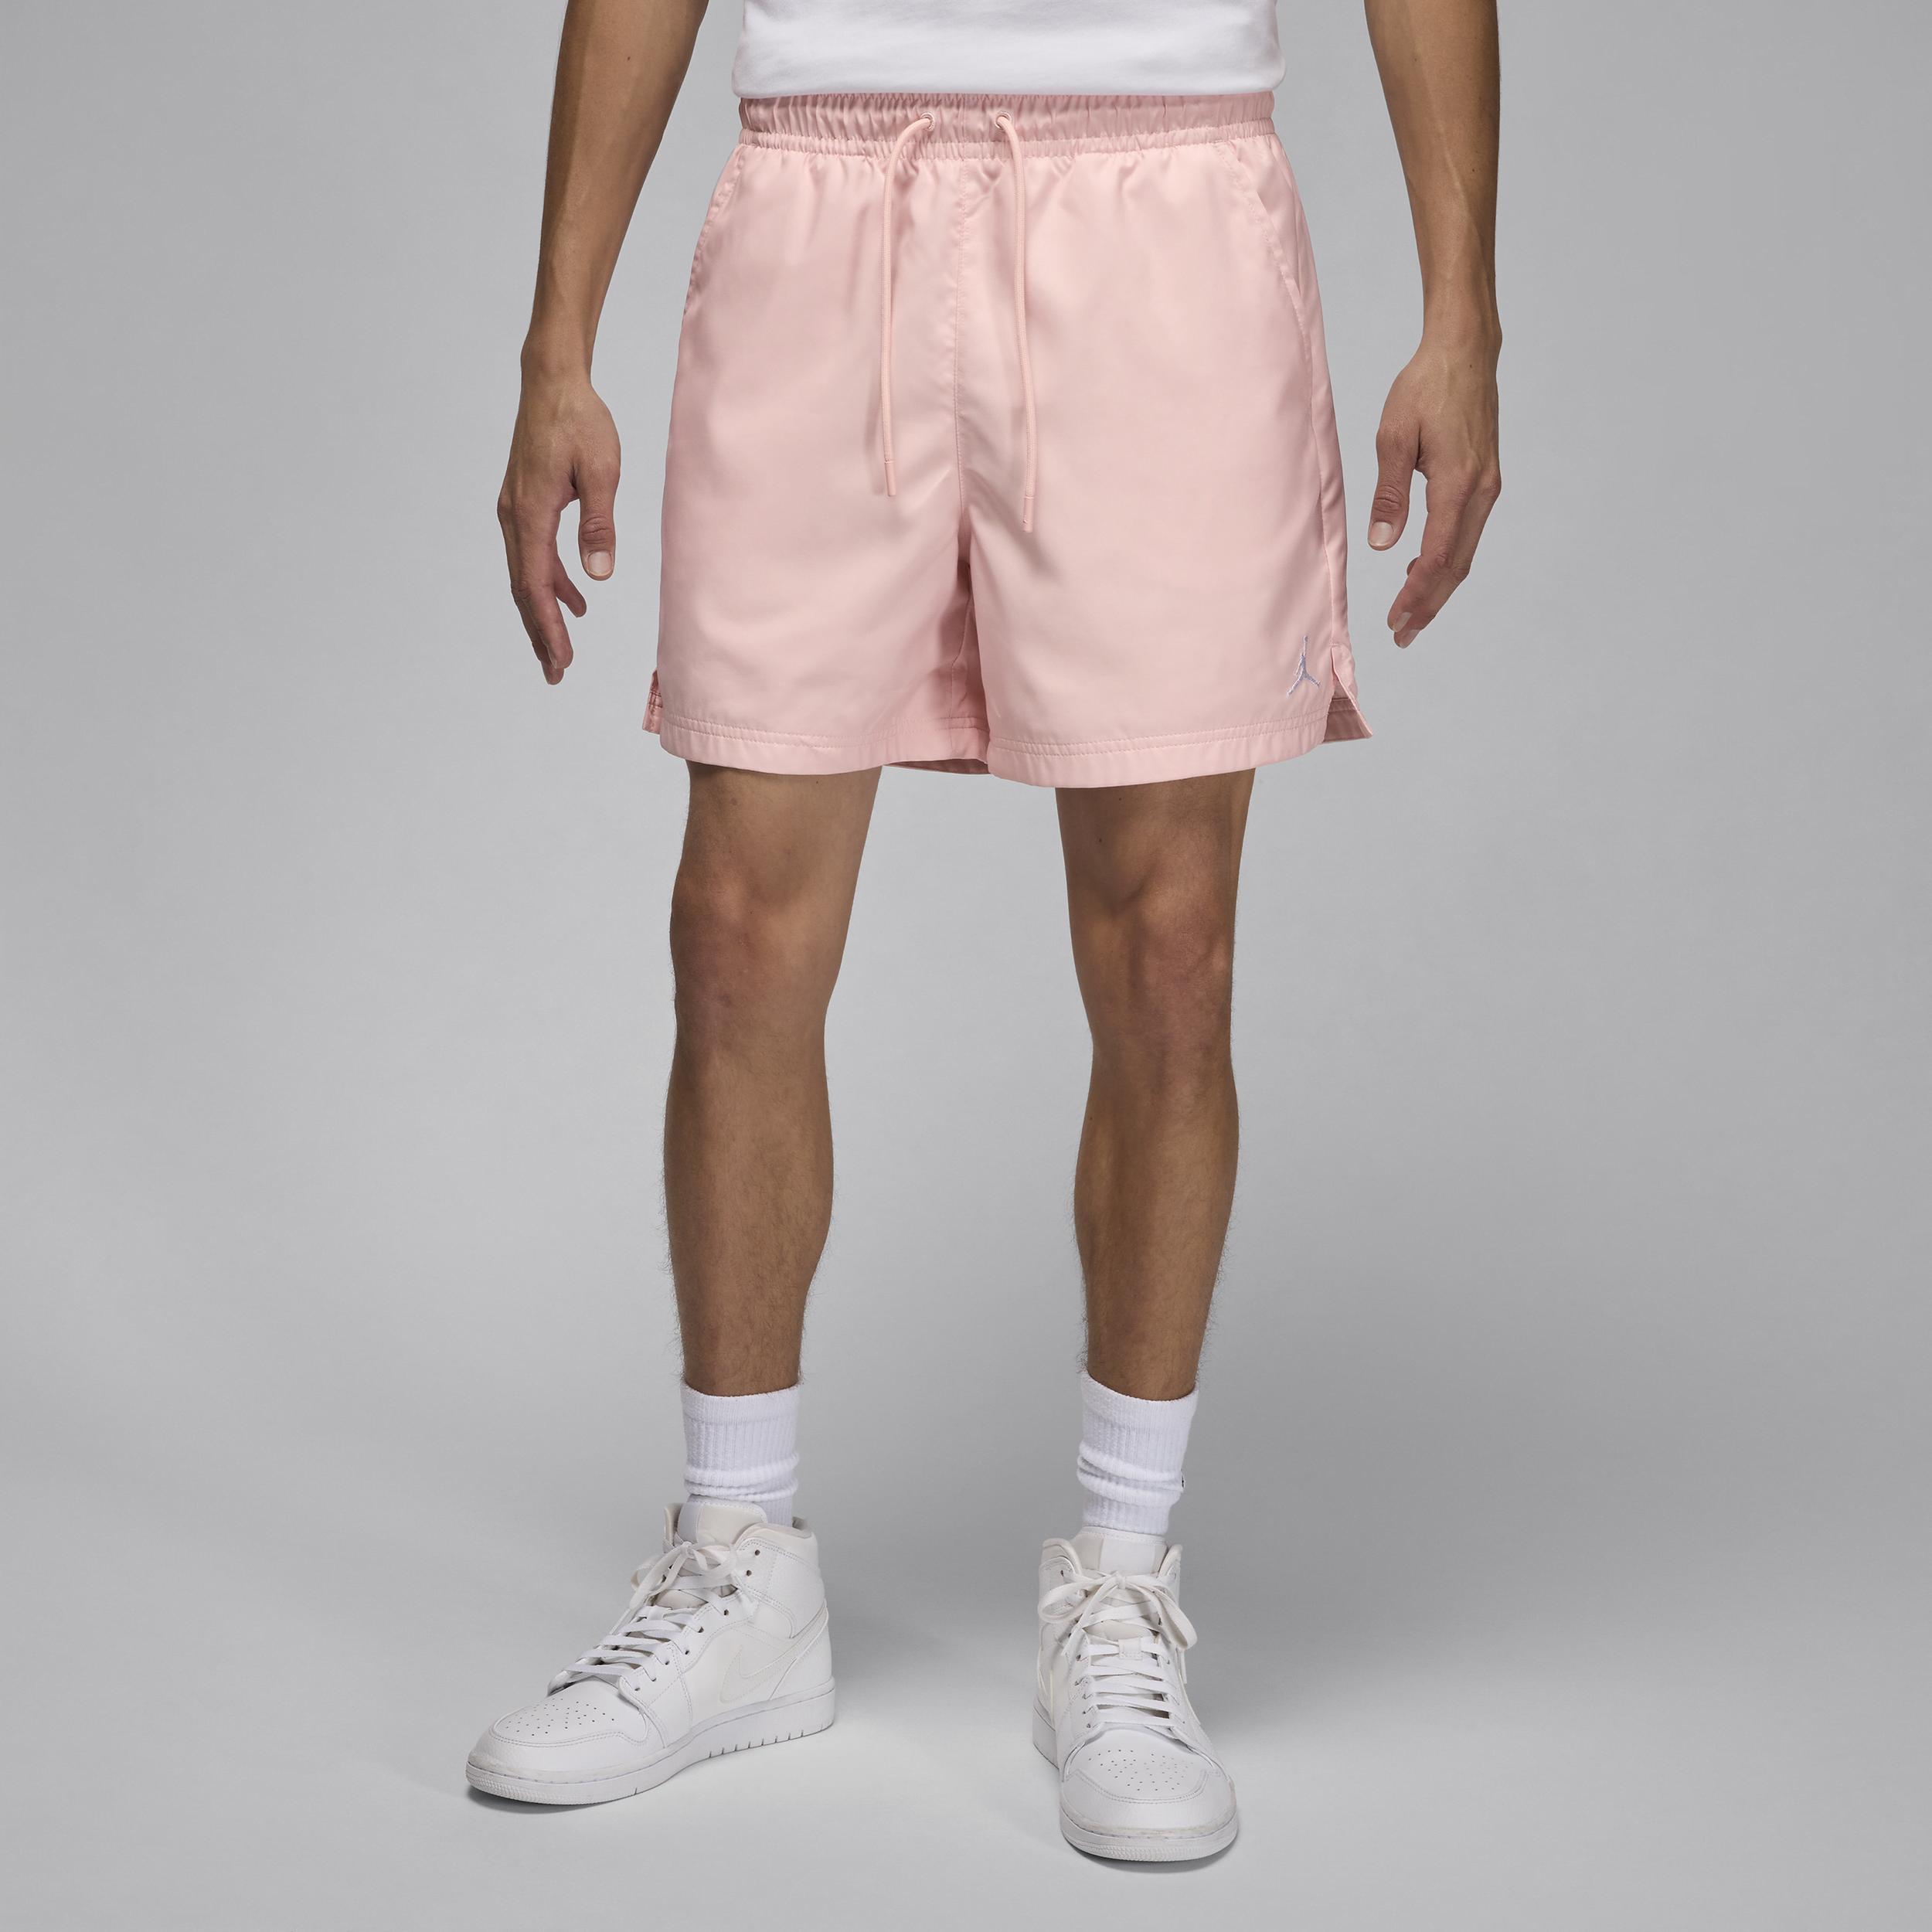 Nike Shorts Poolside 13 cm Jordan Essentials – Uomo - Rosso